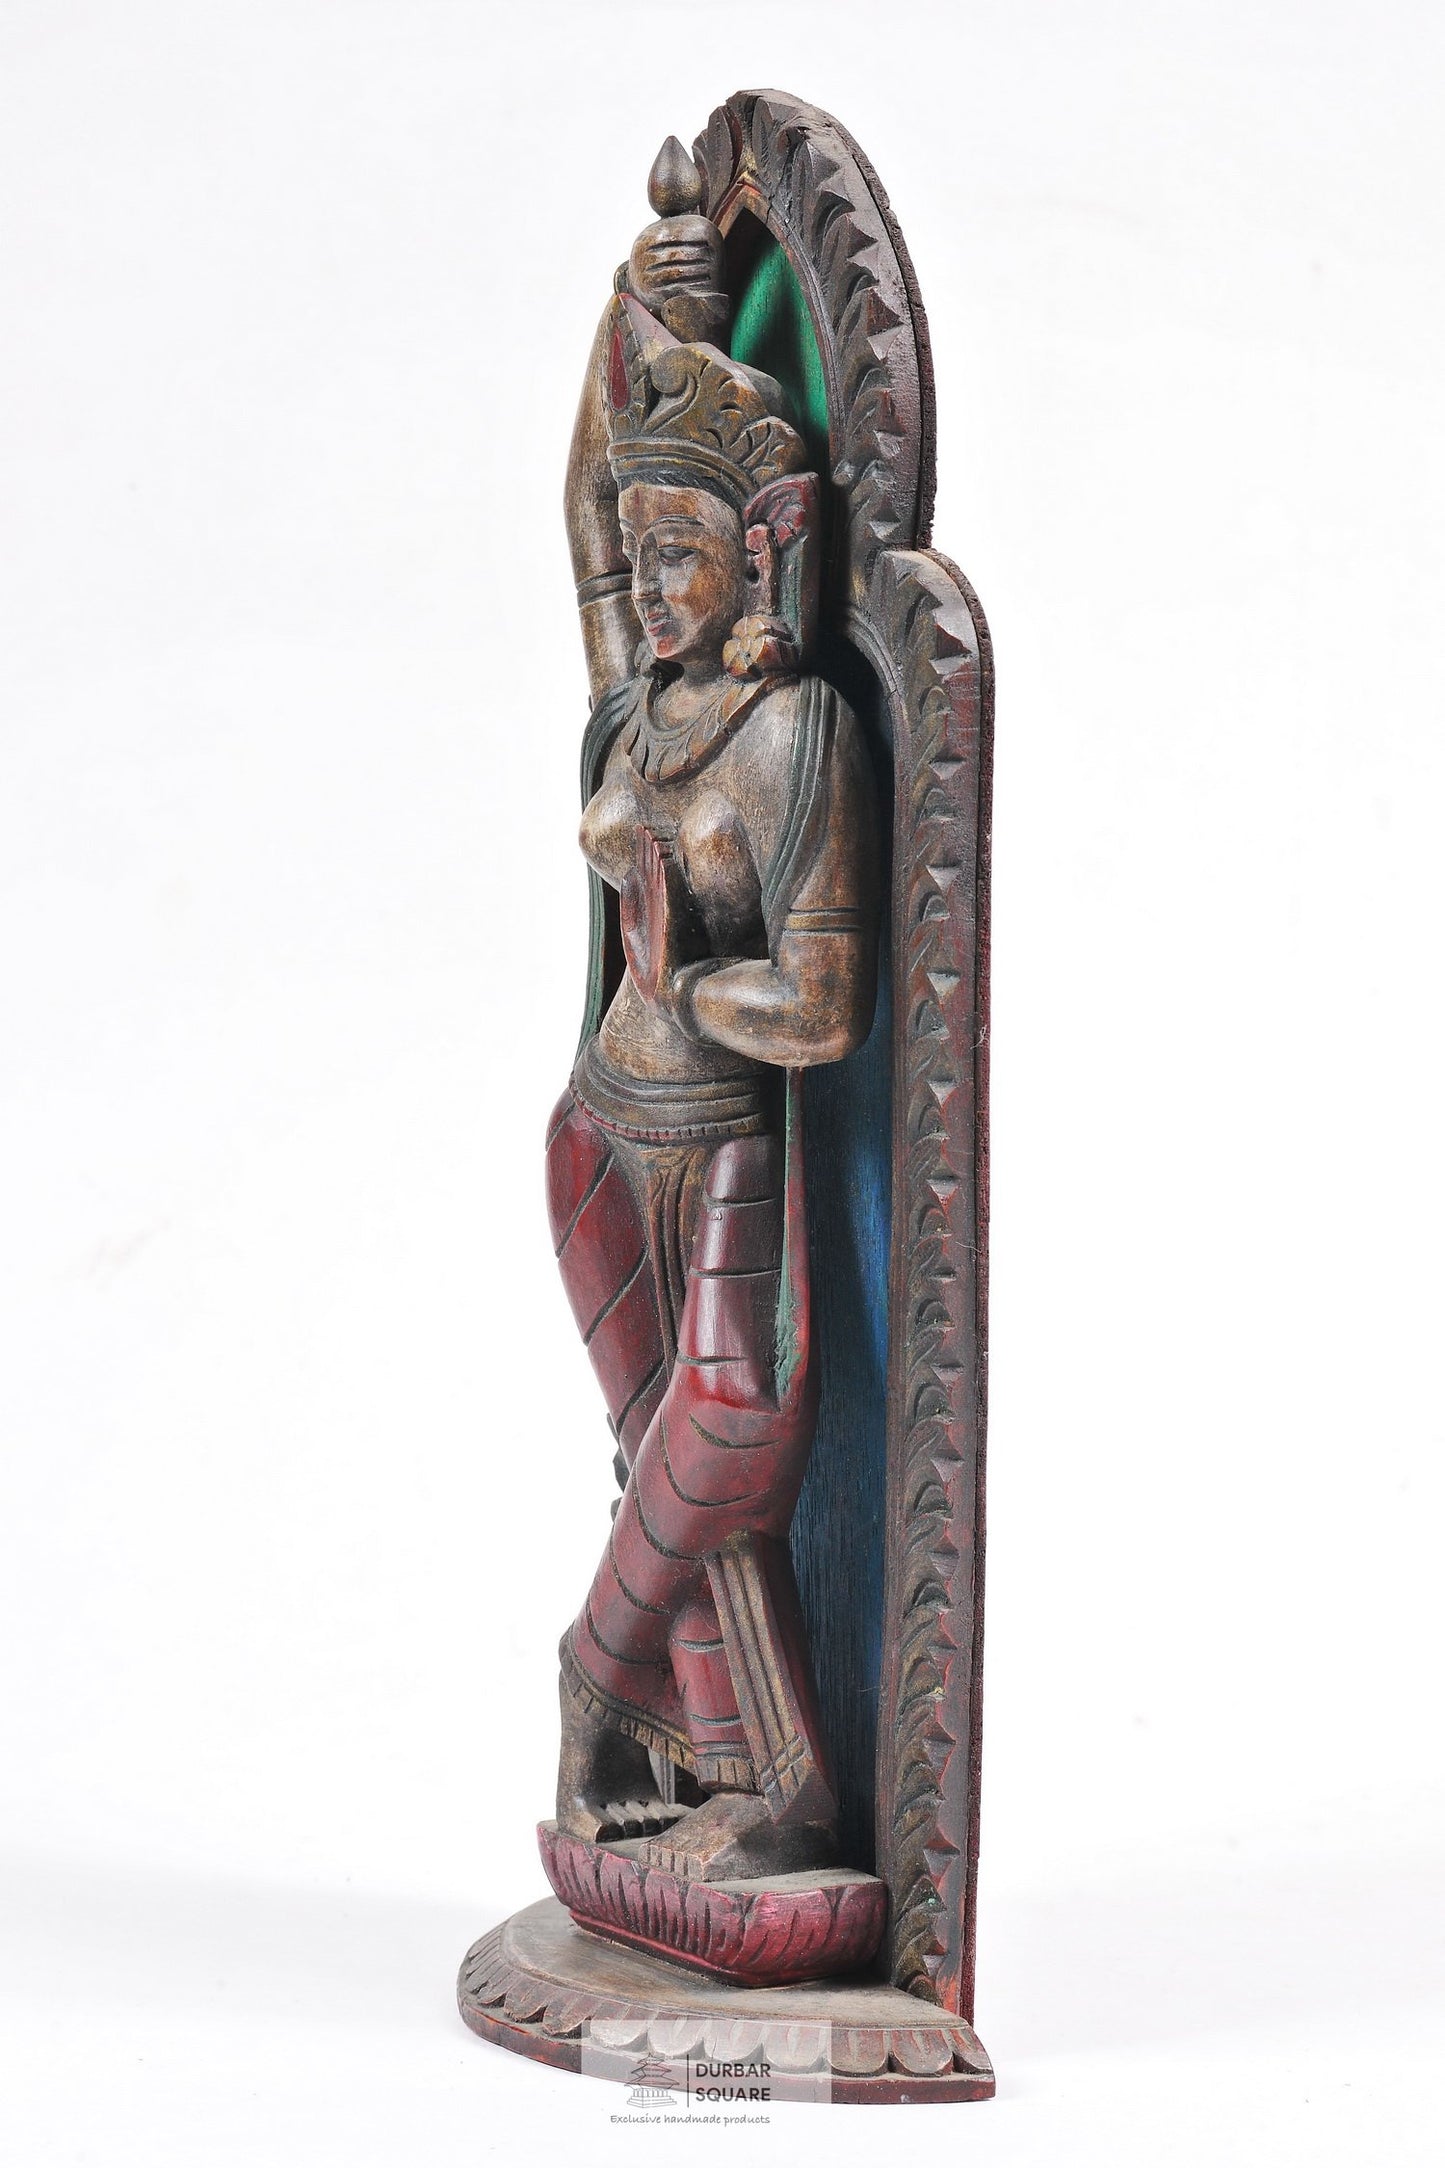 Wooden Mayadevi Statue